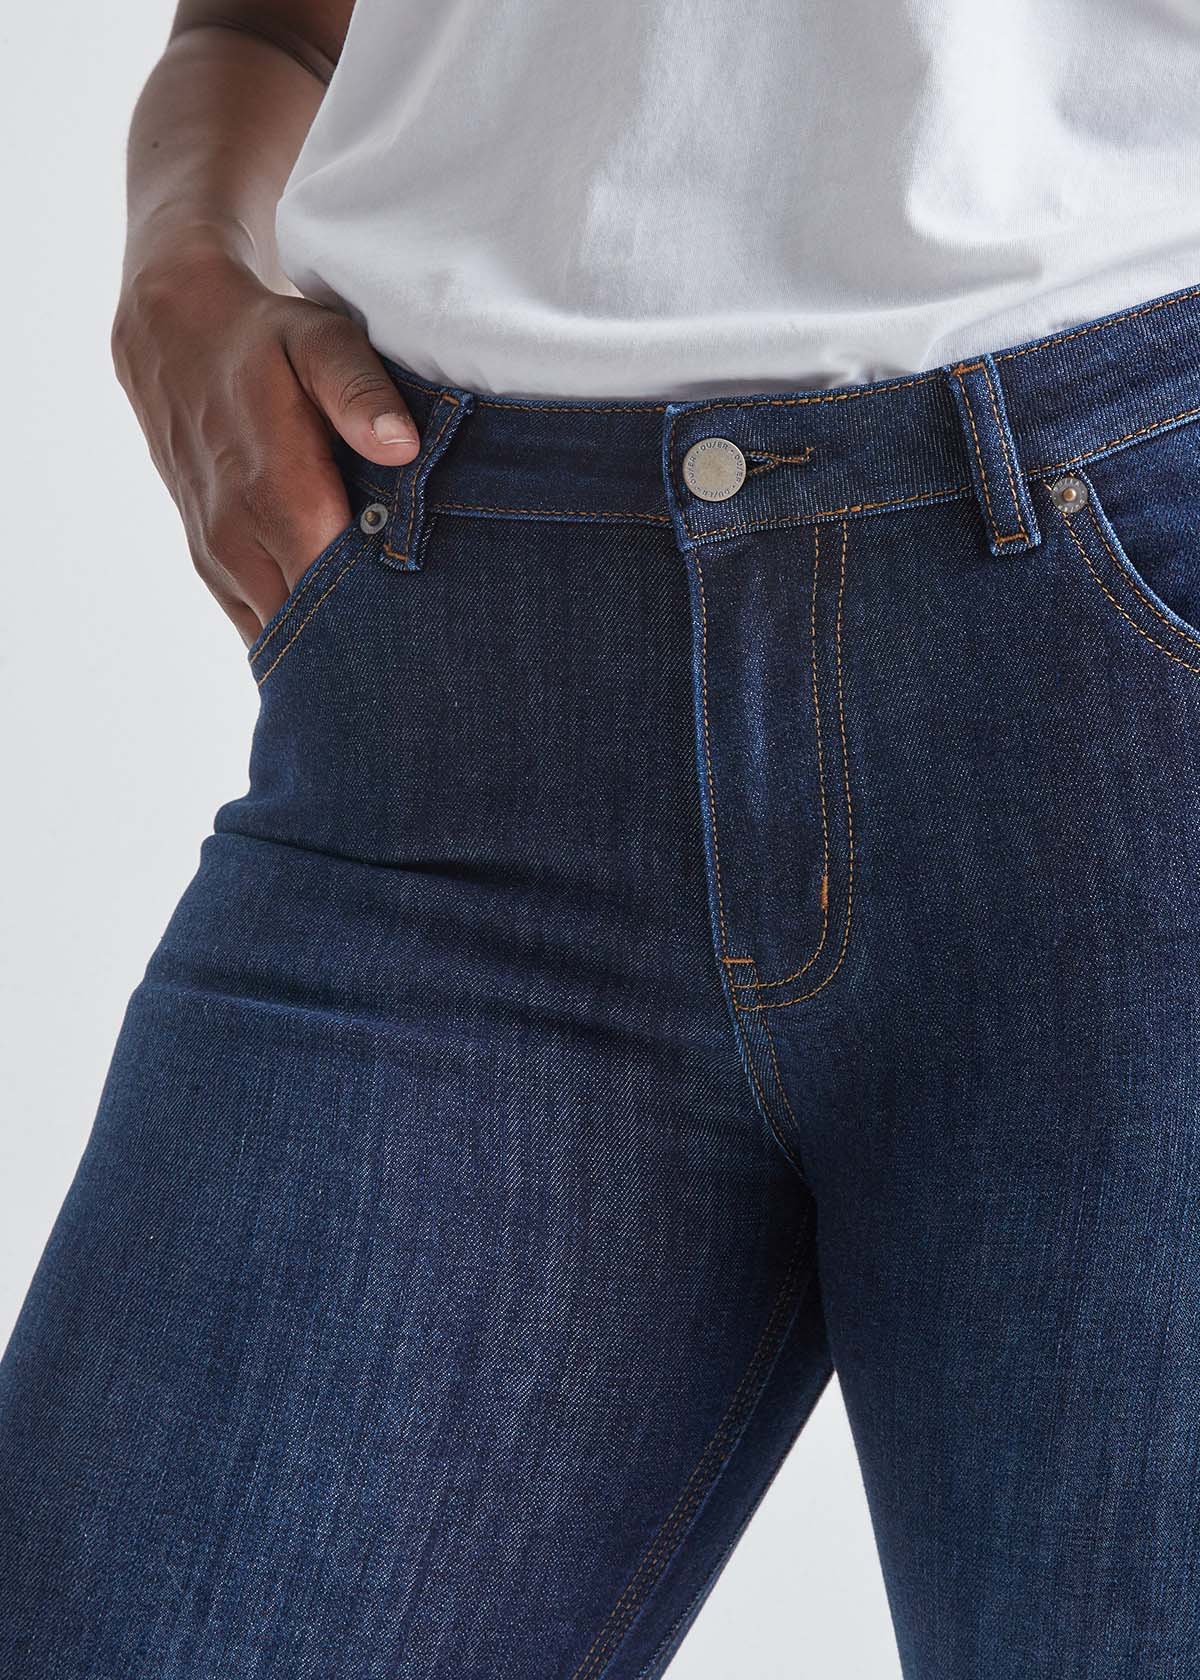 Women's Slim Straight dark blue stretch jeans front waistband